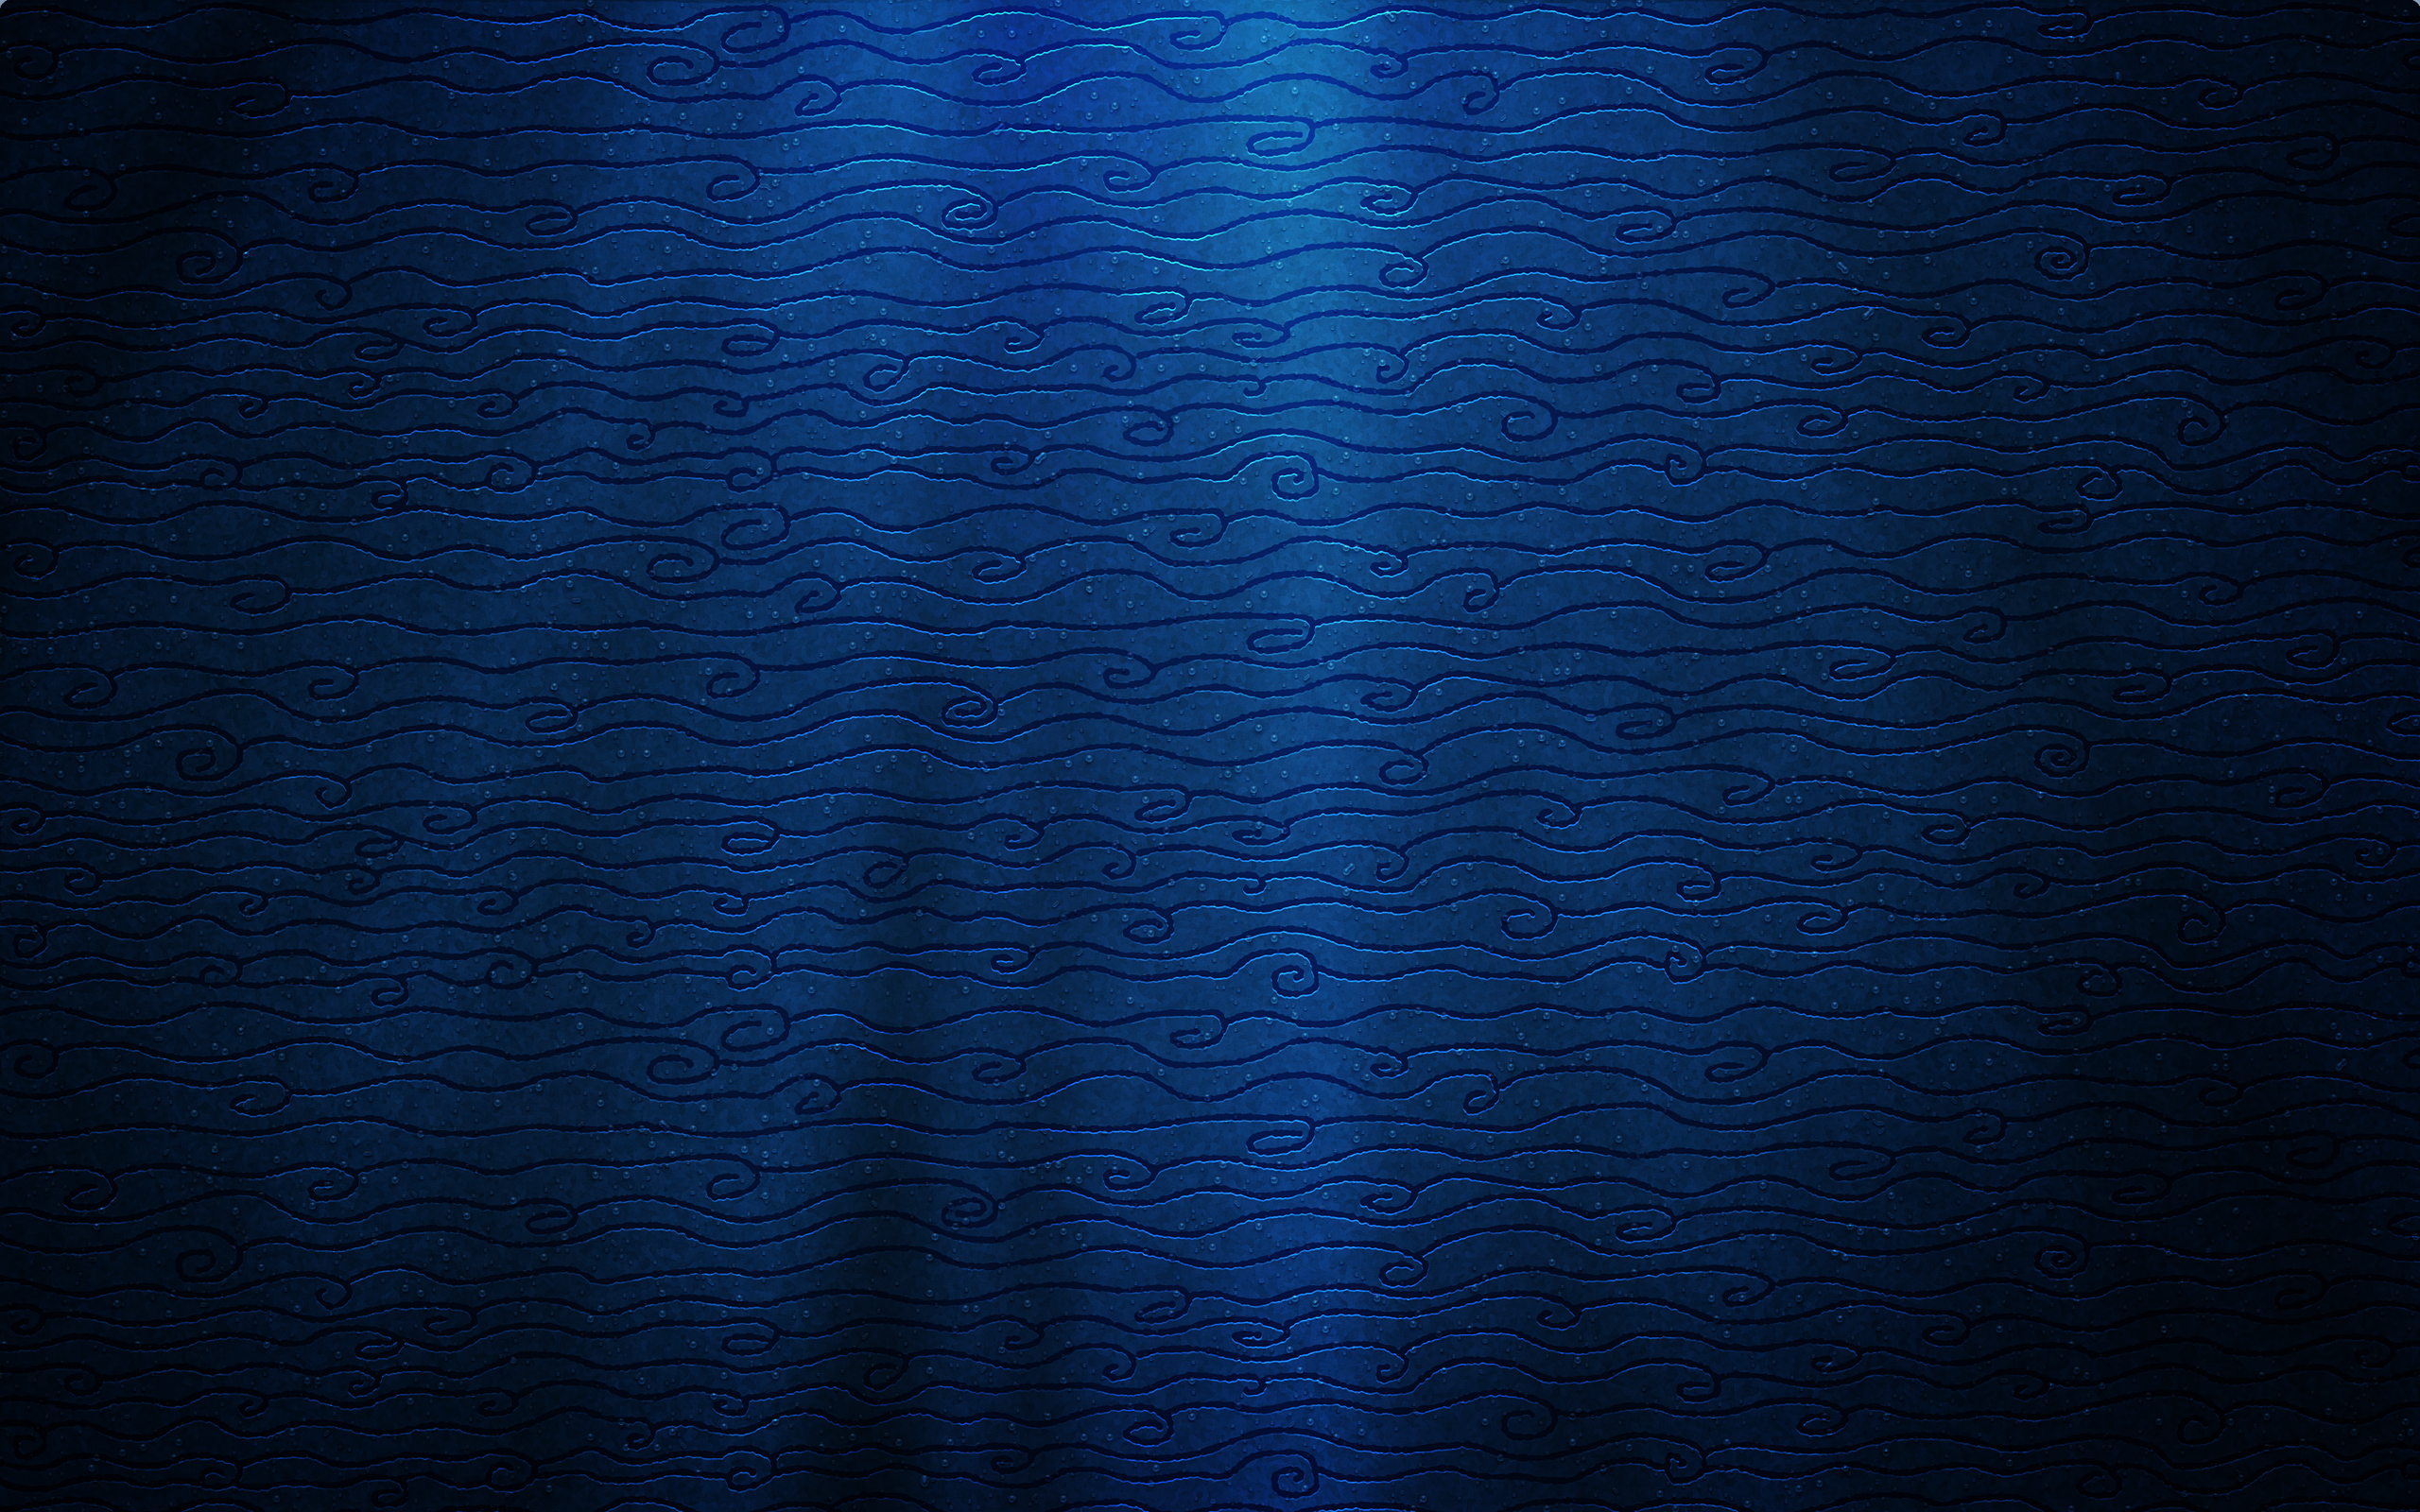 Blue Computer Wallpapers Desktop Backgrounds 2560x1600 ID86718